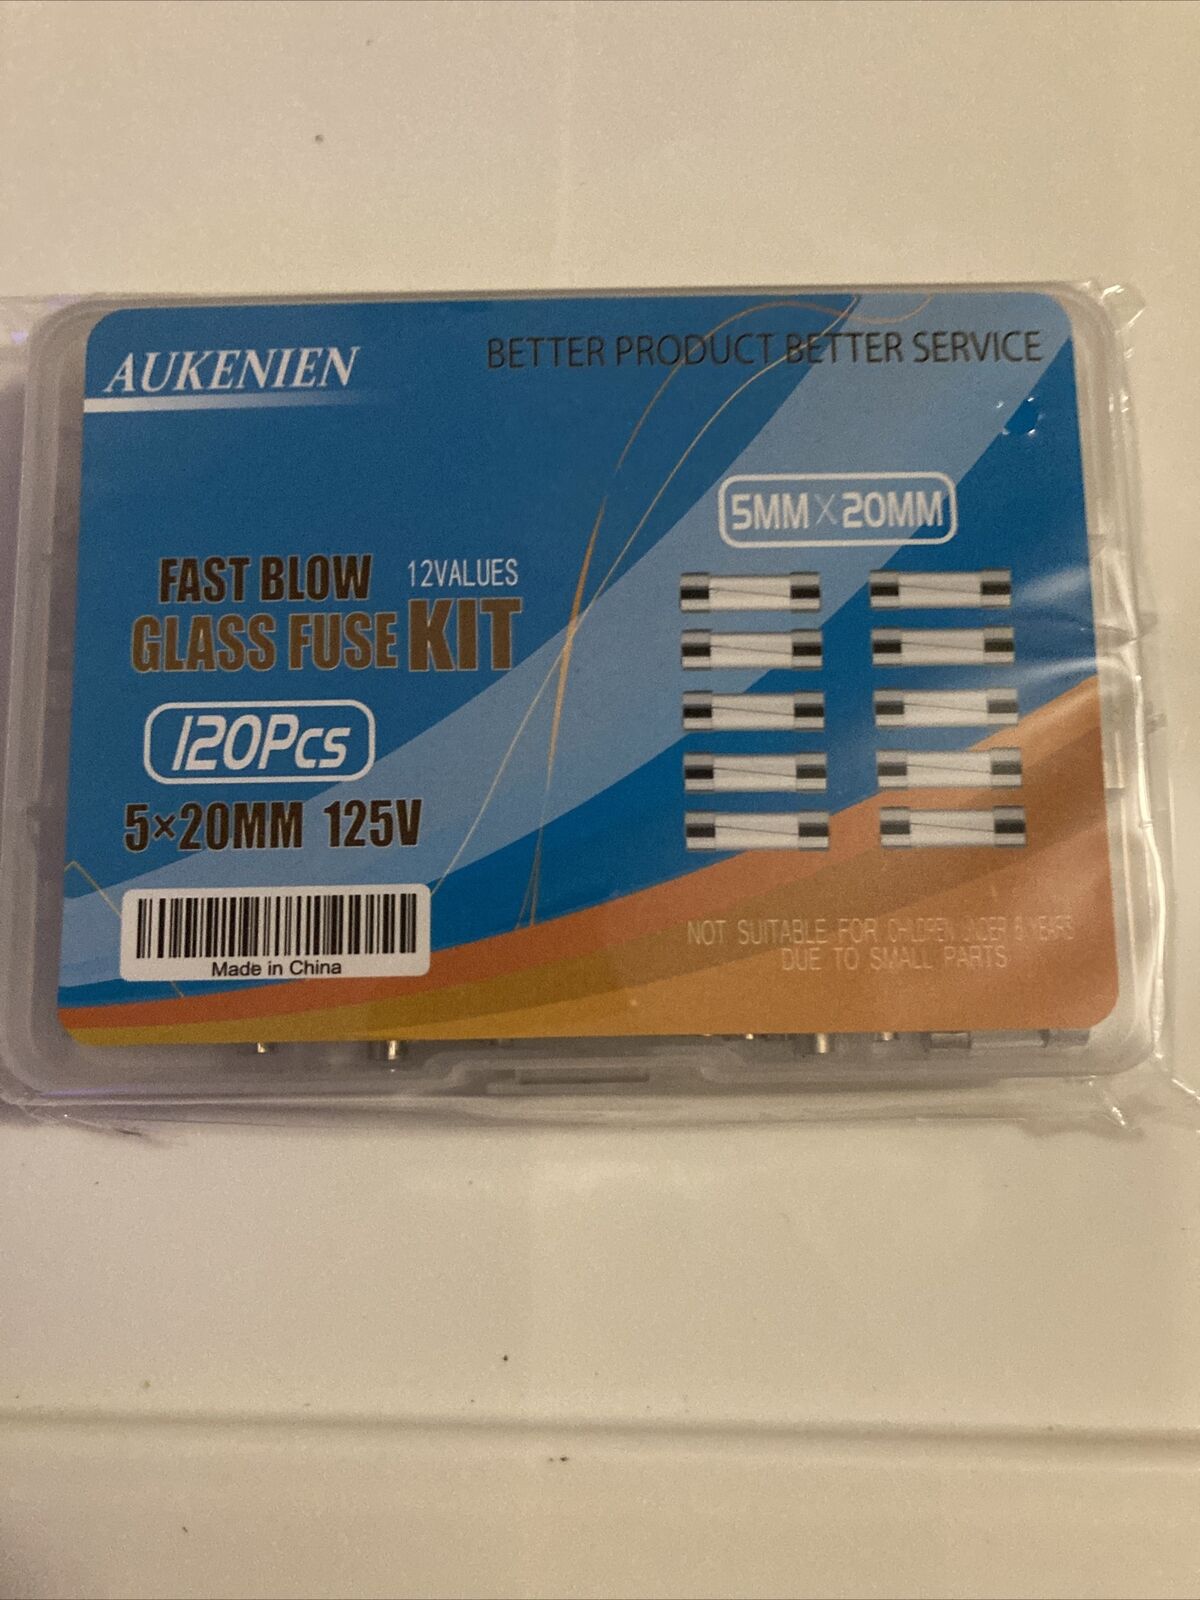 AUKENIEN Fast Blow Glass Fuses Kit 12 Values 120 pcs 5x20mm ,New Sealed box